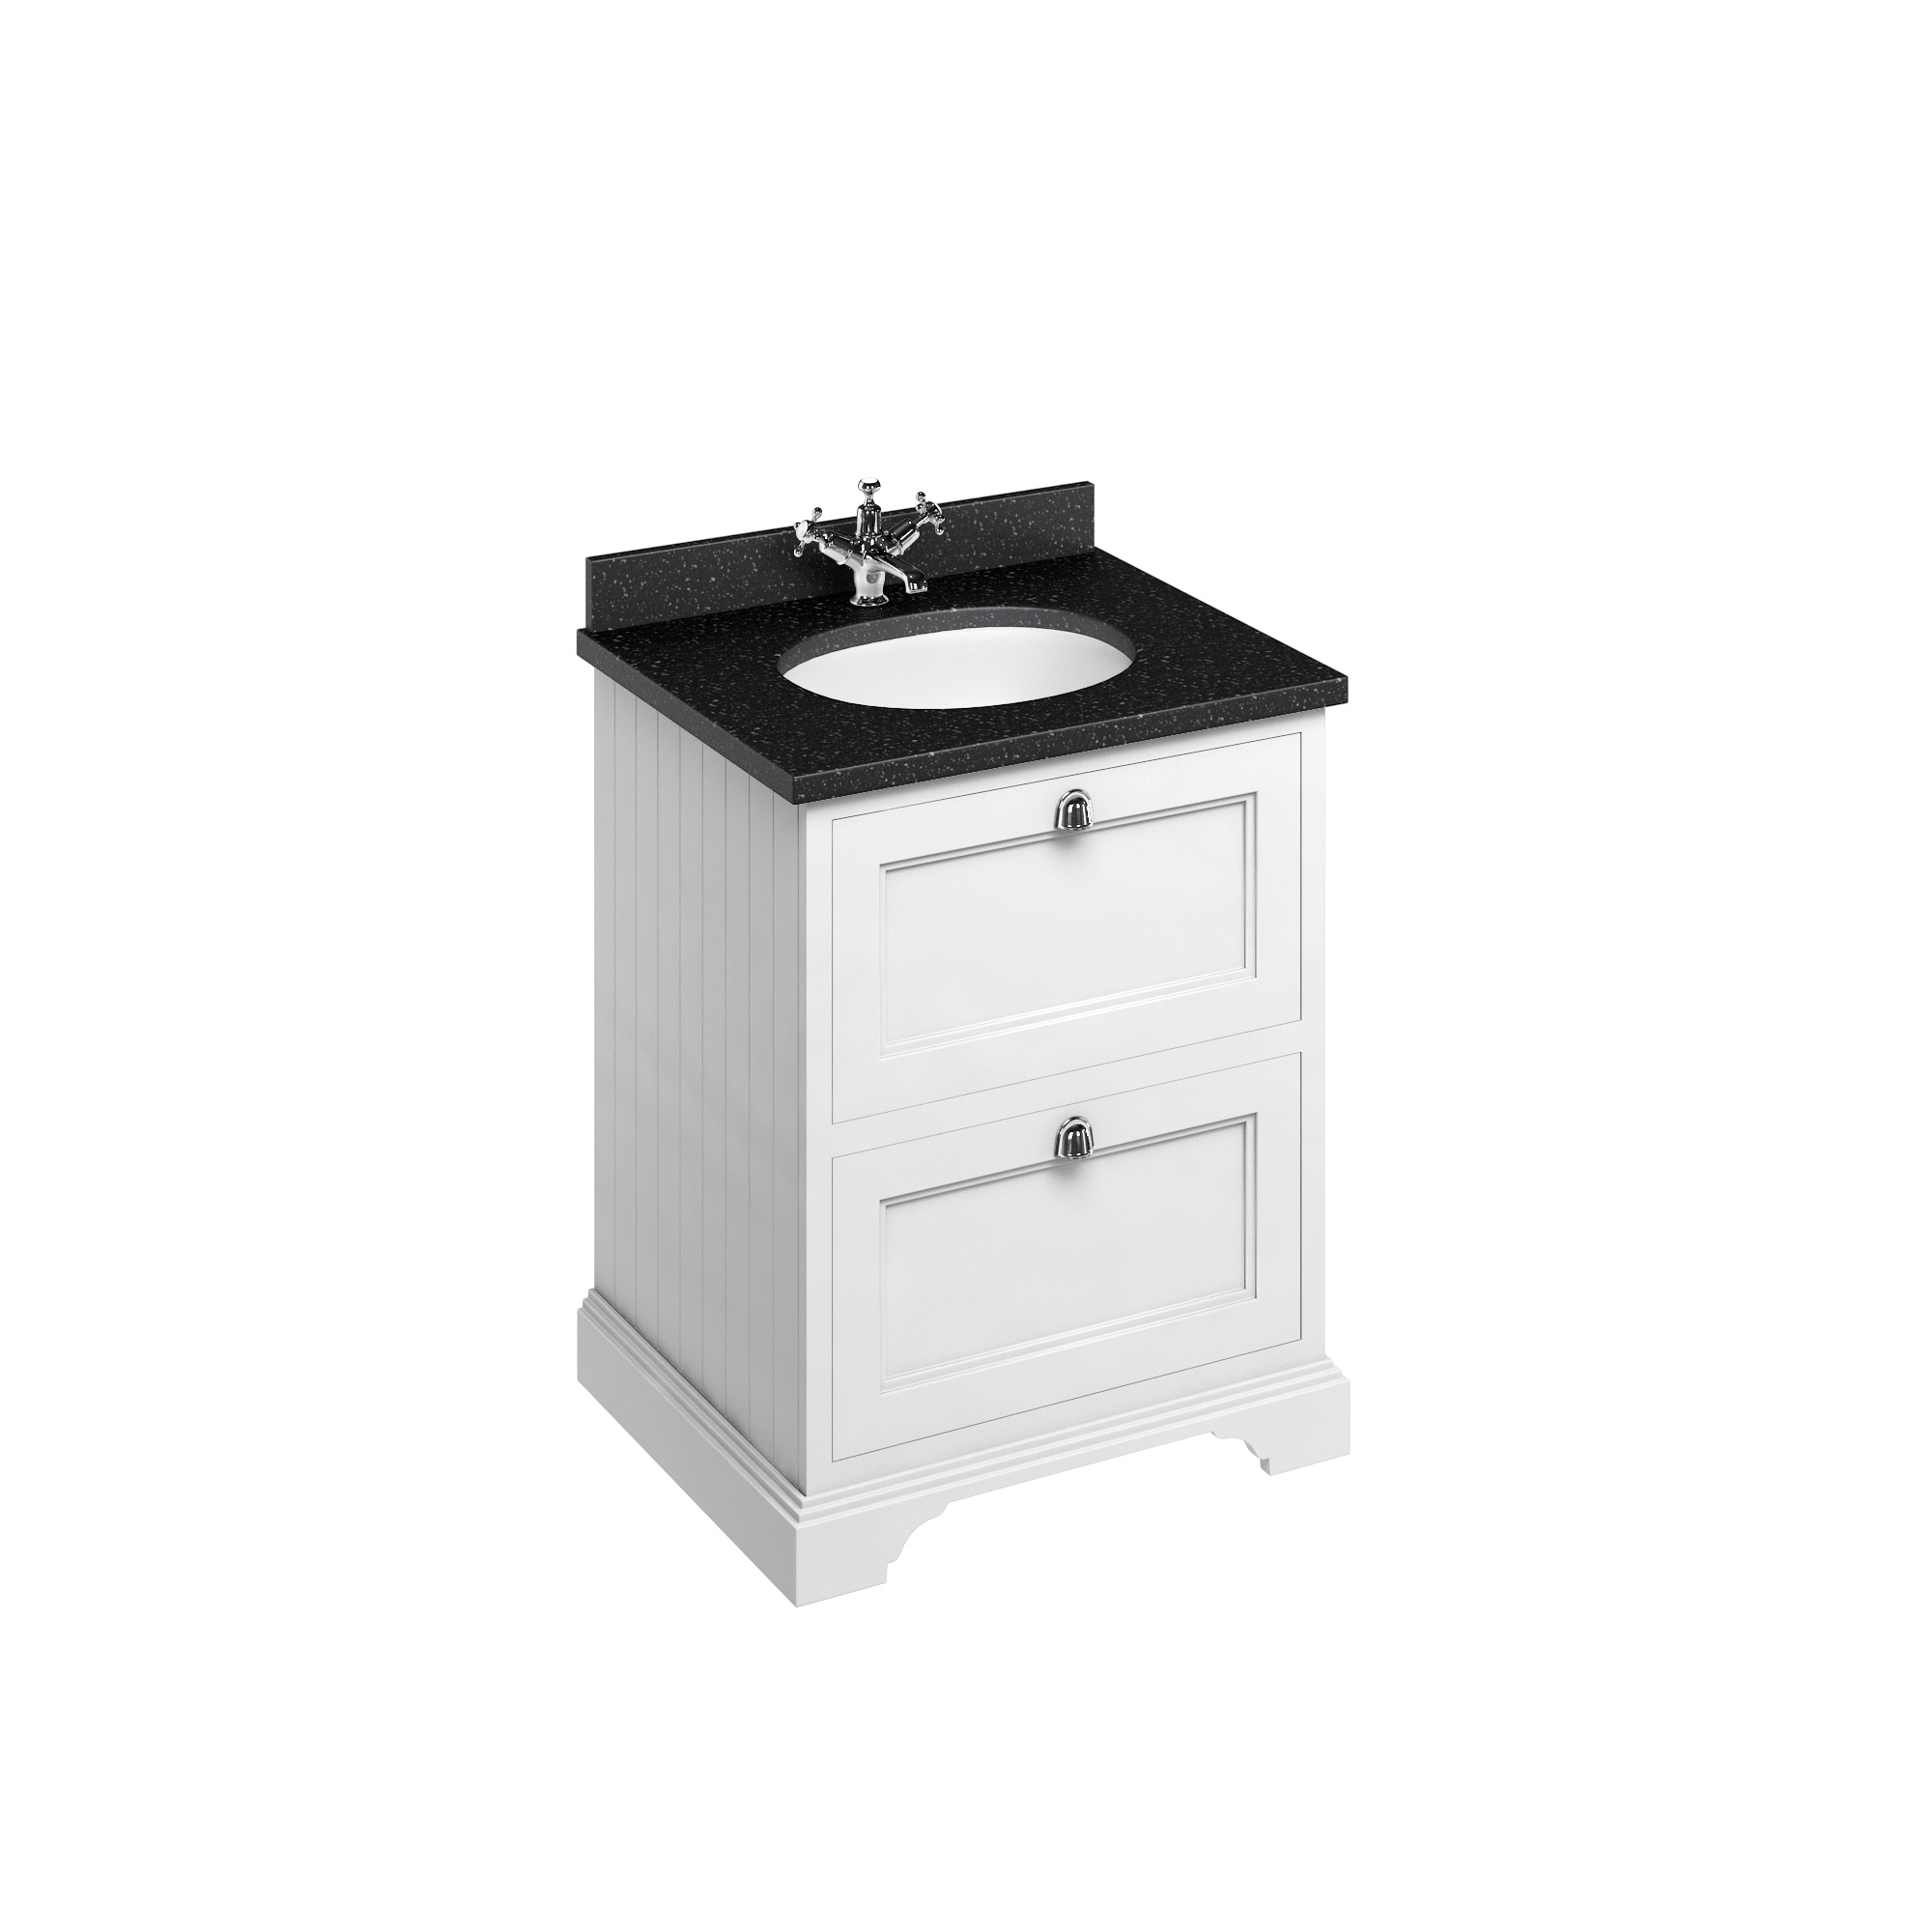 Freestanding 65 Vanity Unit with 2 drawers - Matt White and Minerva black granite worktop with integrated white basin